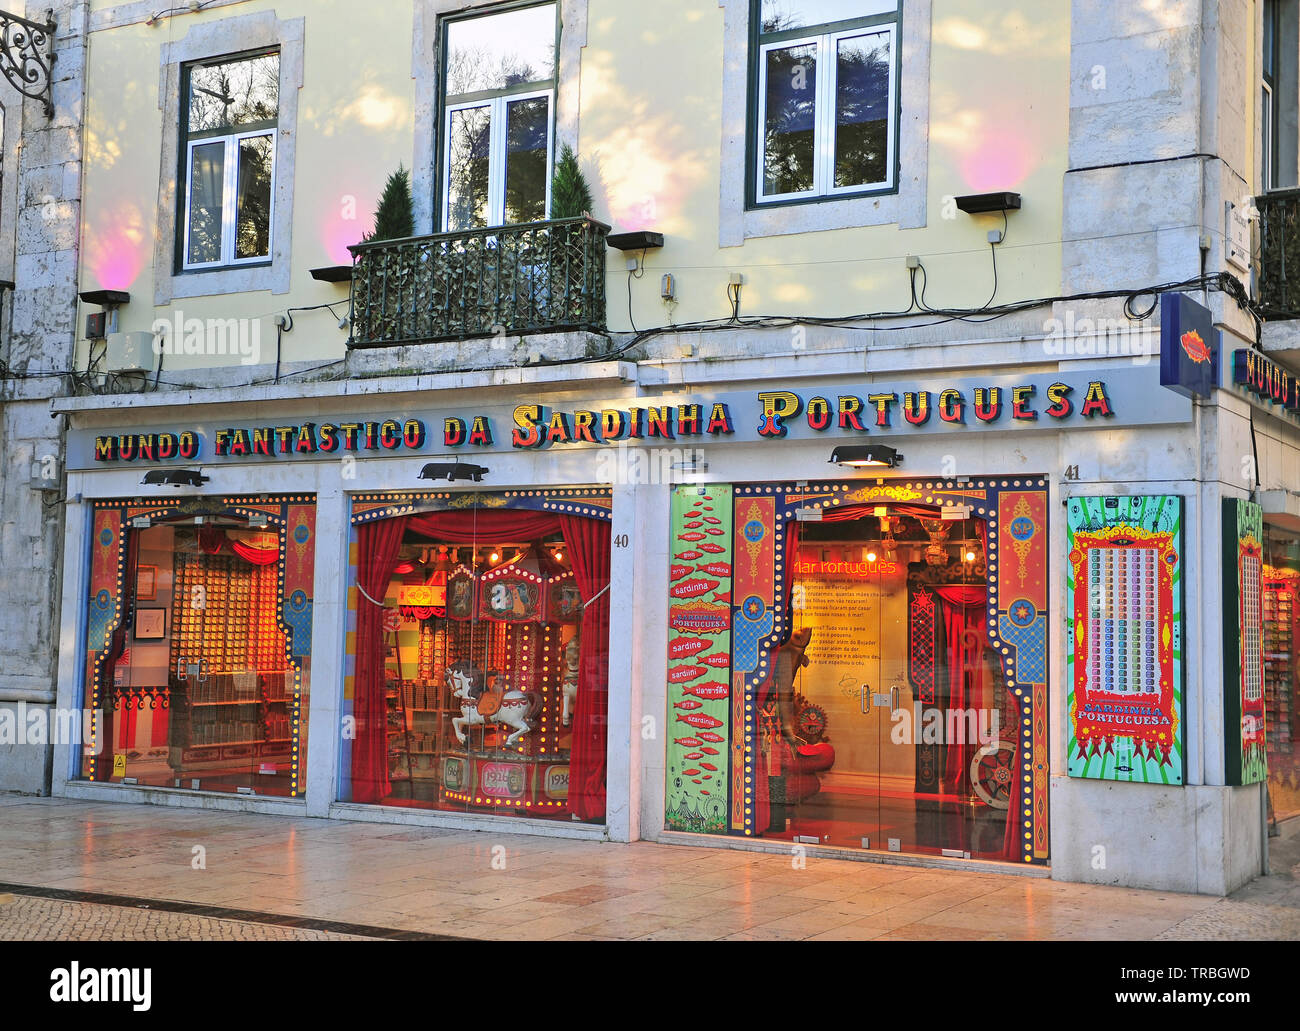 LISBON, PORTUGAL - FEBRUARY 14: Facade of Fantastic World of portuguese sardine store on February 14, 2019. Stock Photo